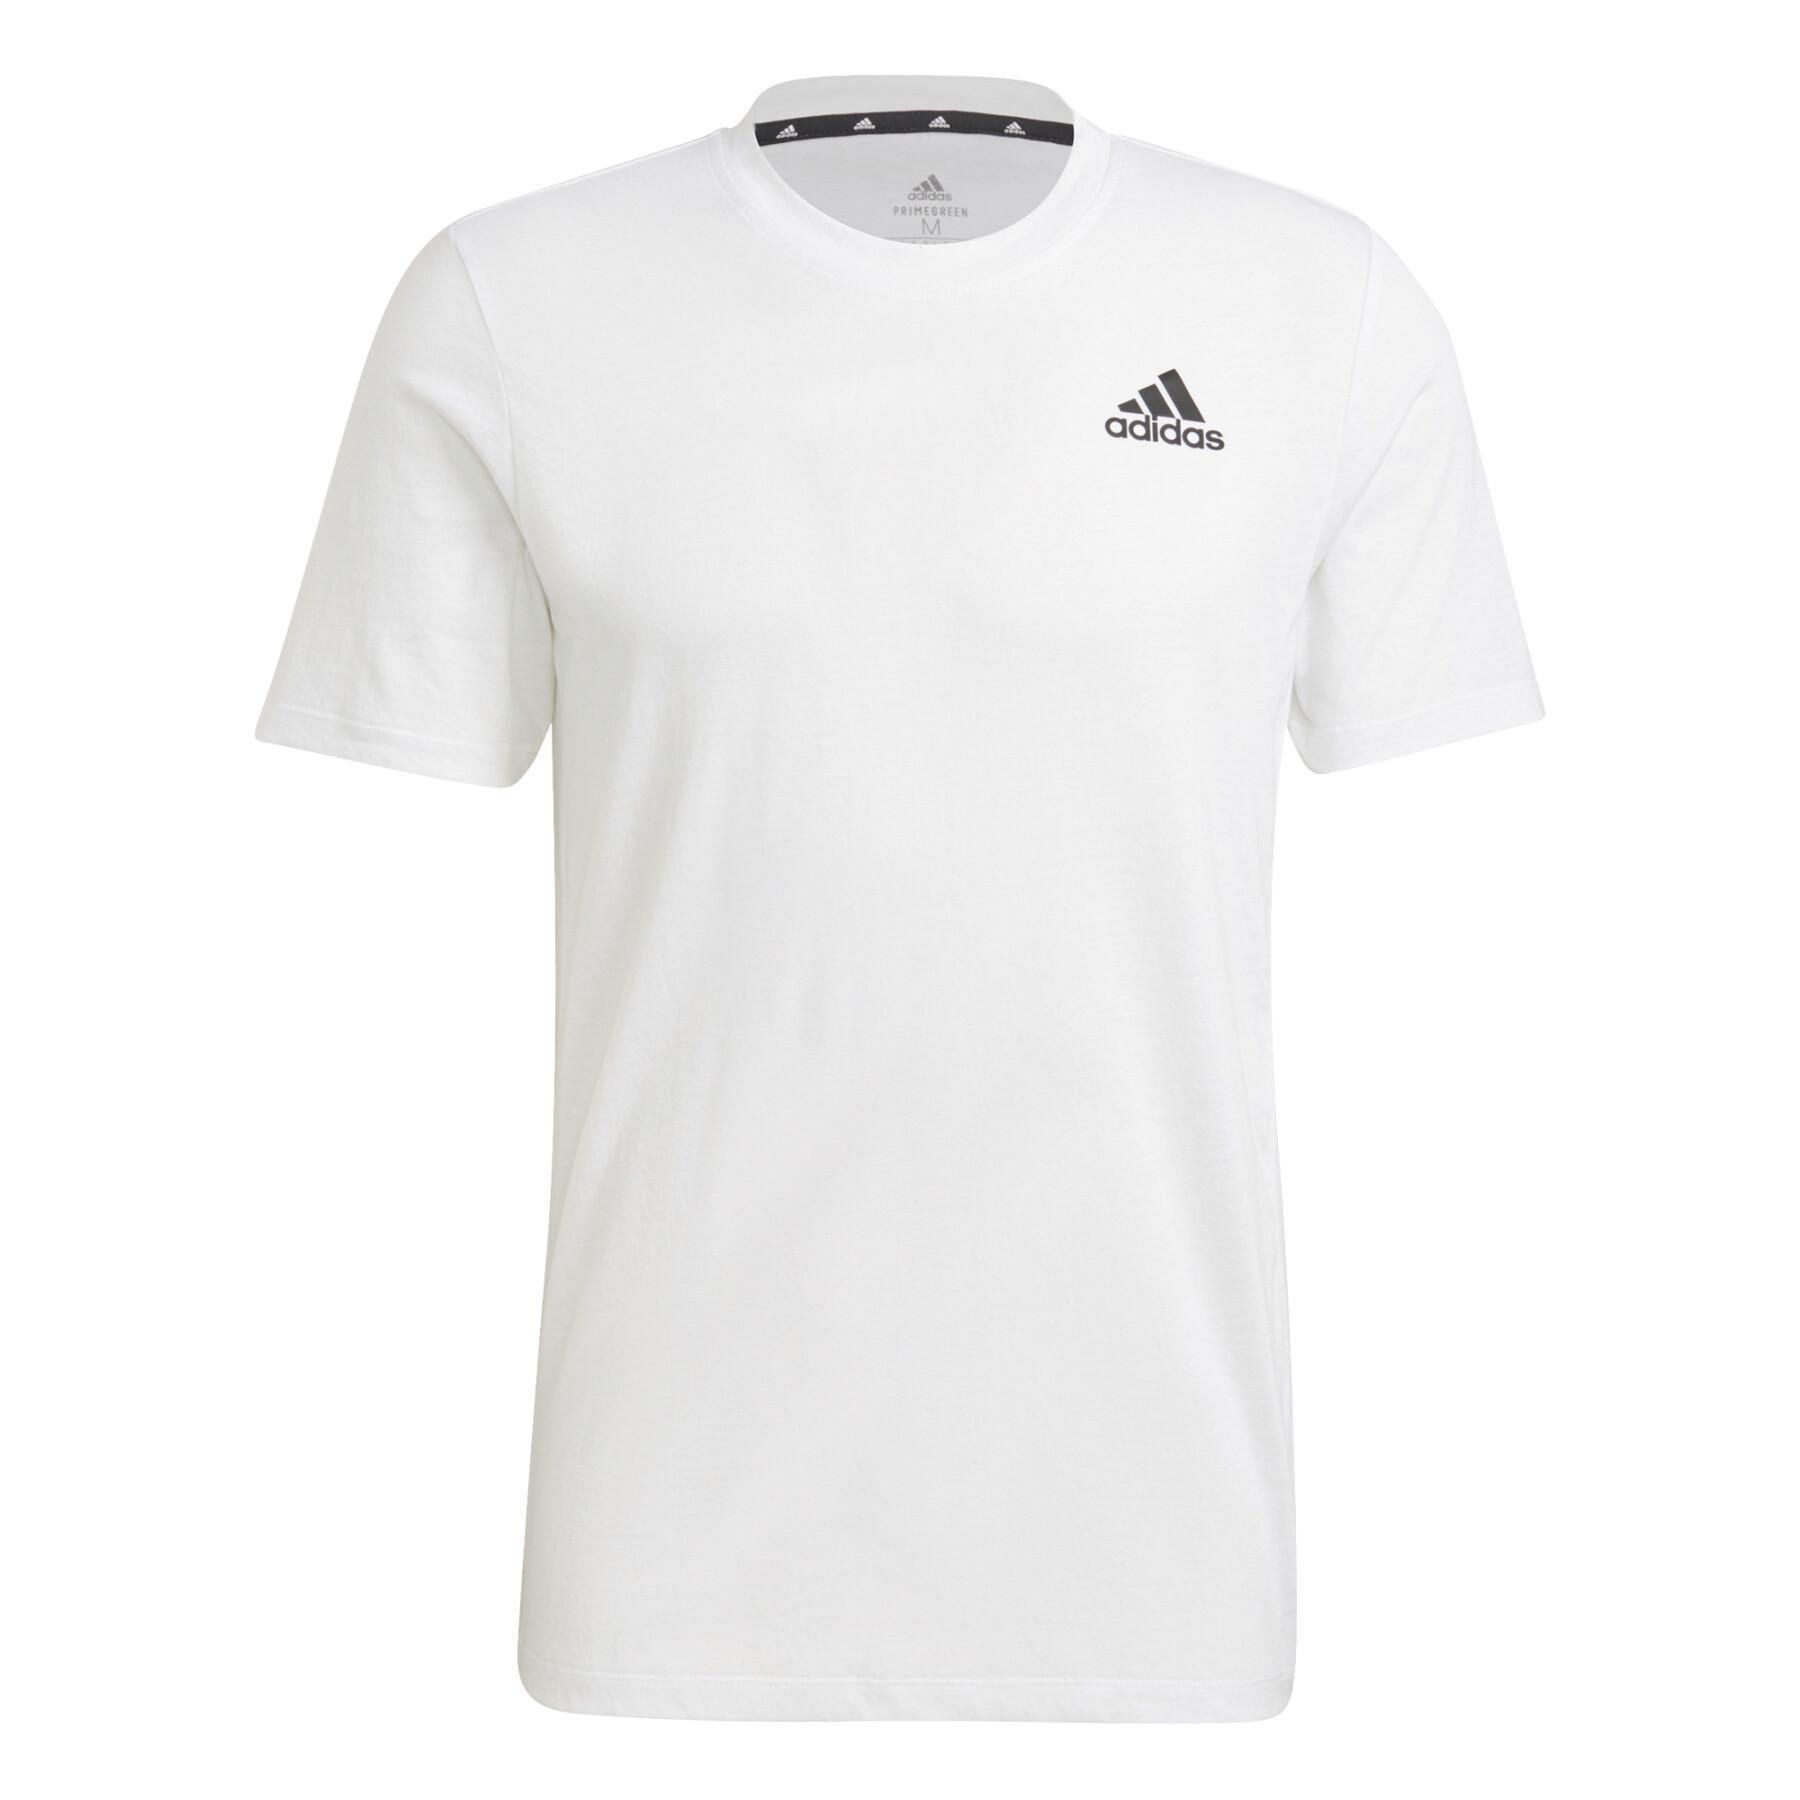 T-shirt adidas Aeroready Designed 2 move Sport